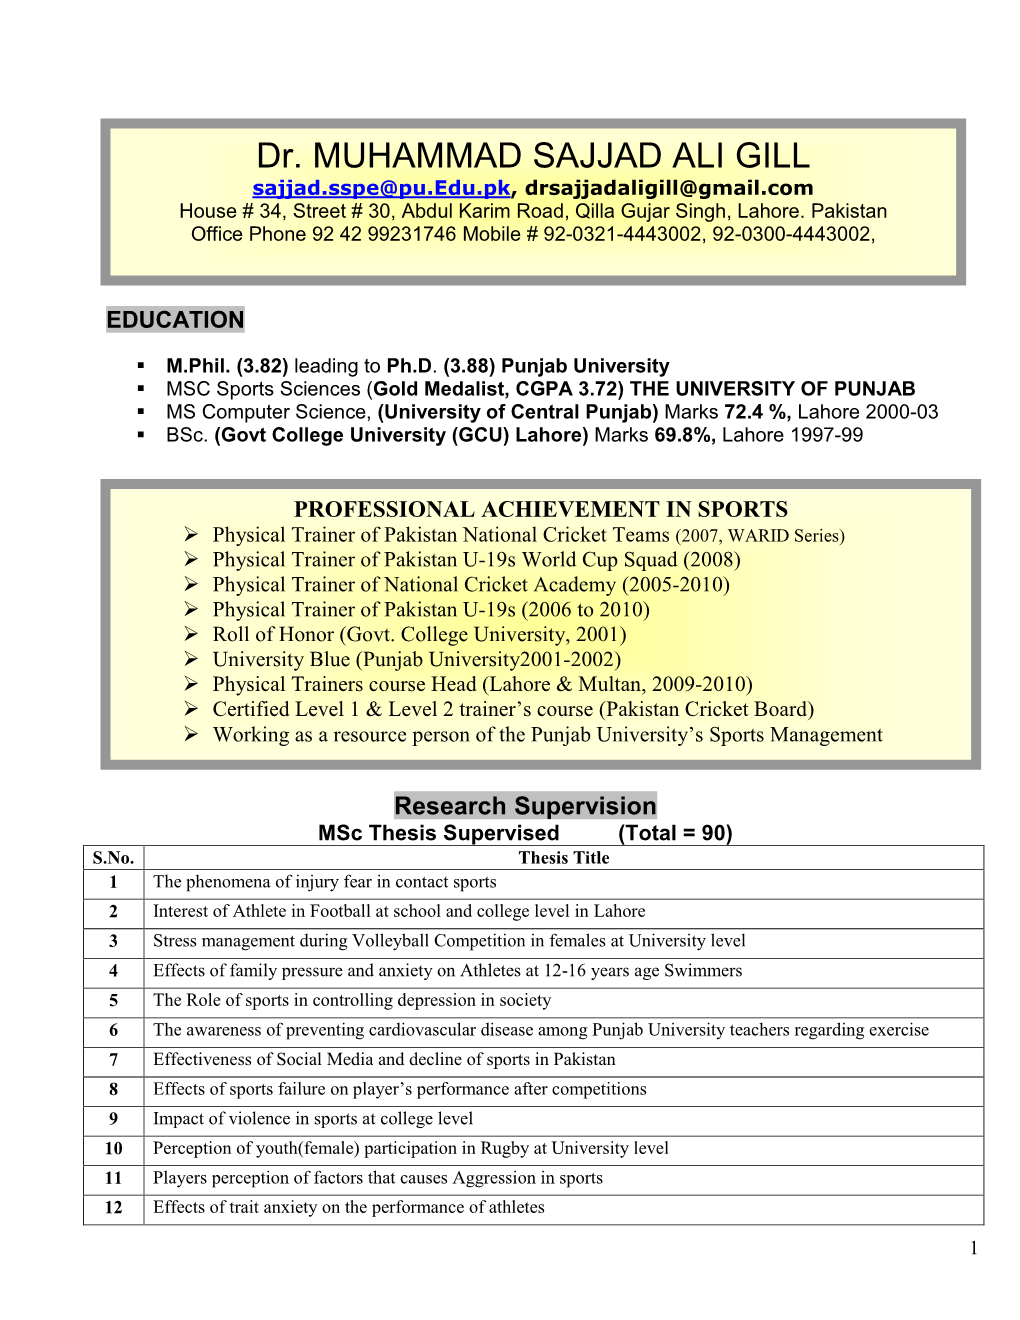 CV of Dr. Mohammad Sajjad Ali Gill